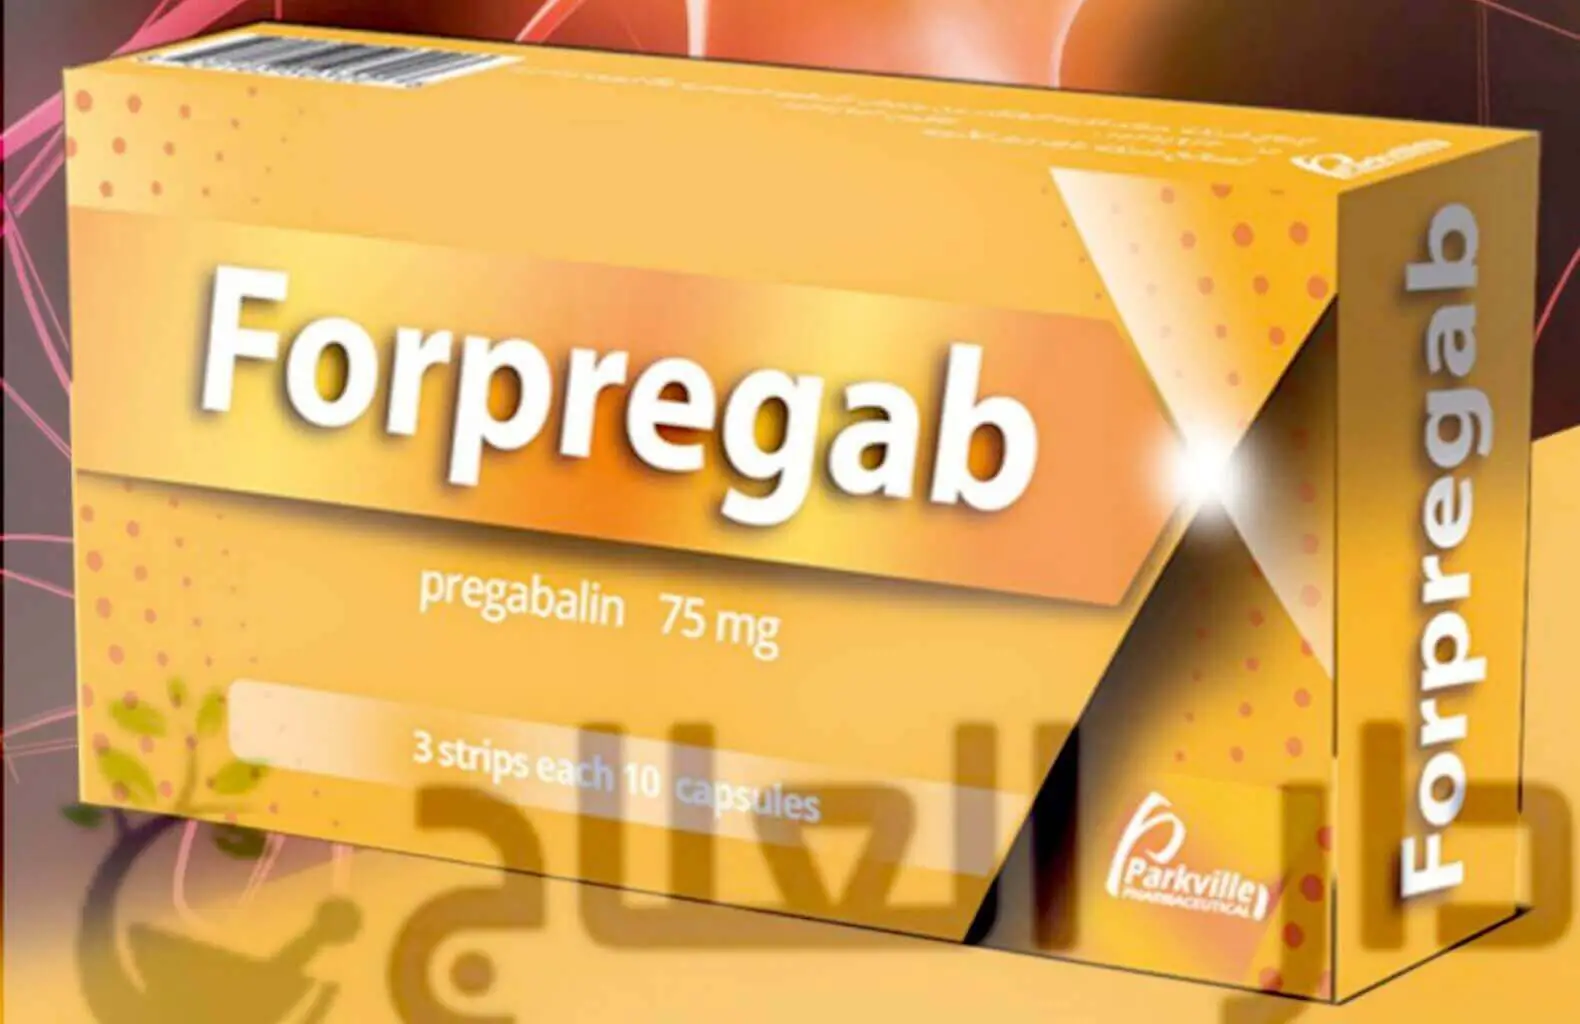 فوربريجاب - فوربريجاب كبسول - دواء فوربريجاب - اقراص فوربريجاب - فوربريجاب اقراص - برشام فوربريجاب - forpregab